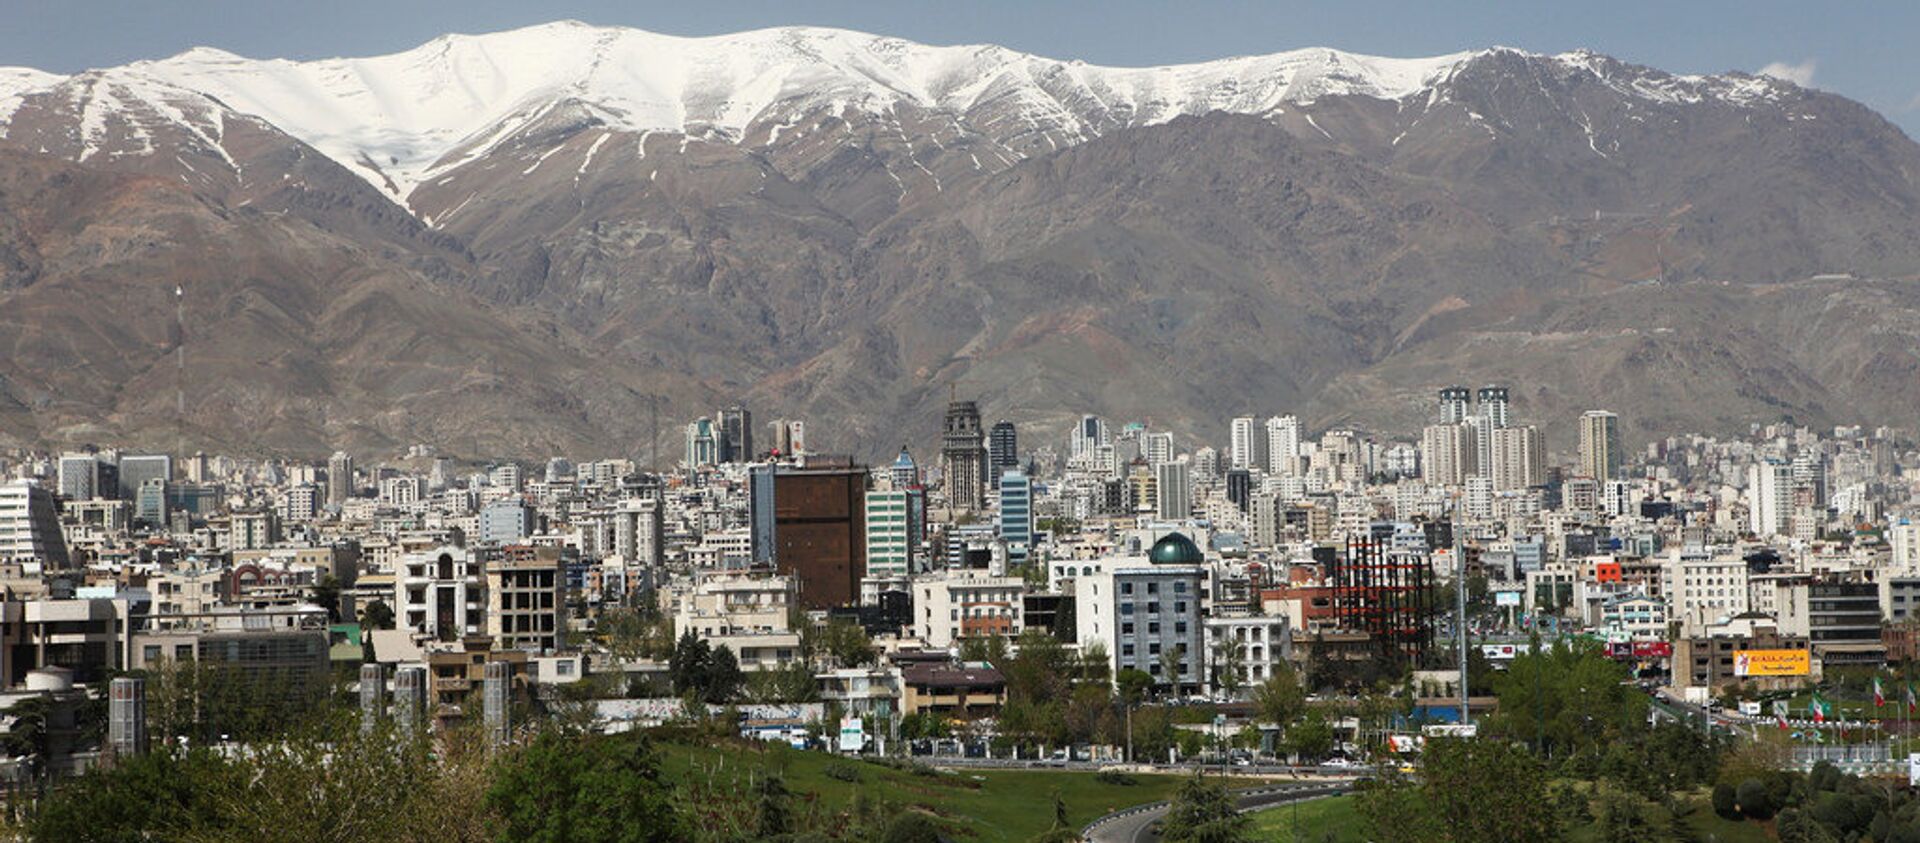 Tehran - Sputnik International, 1920, 06.12.2016